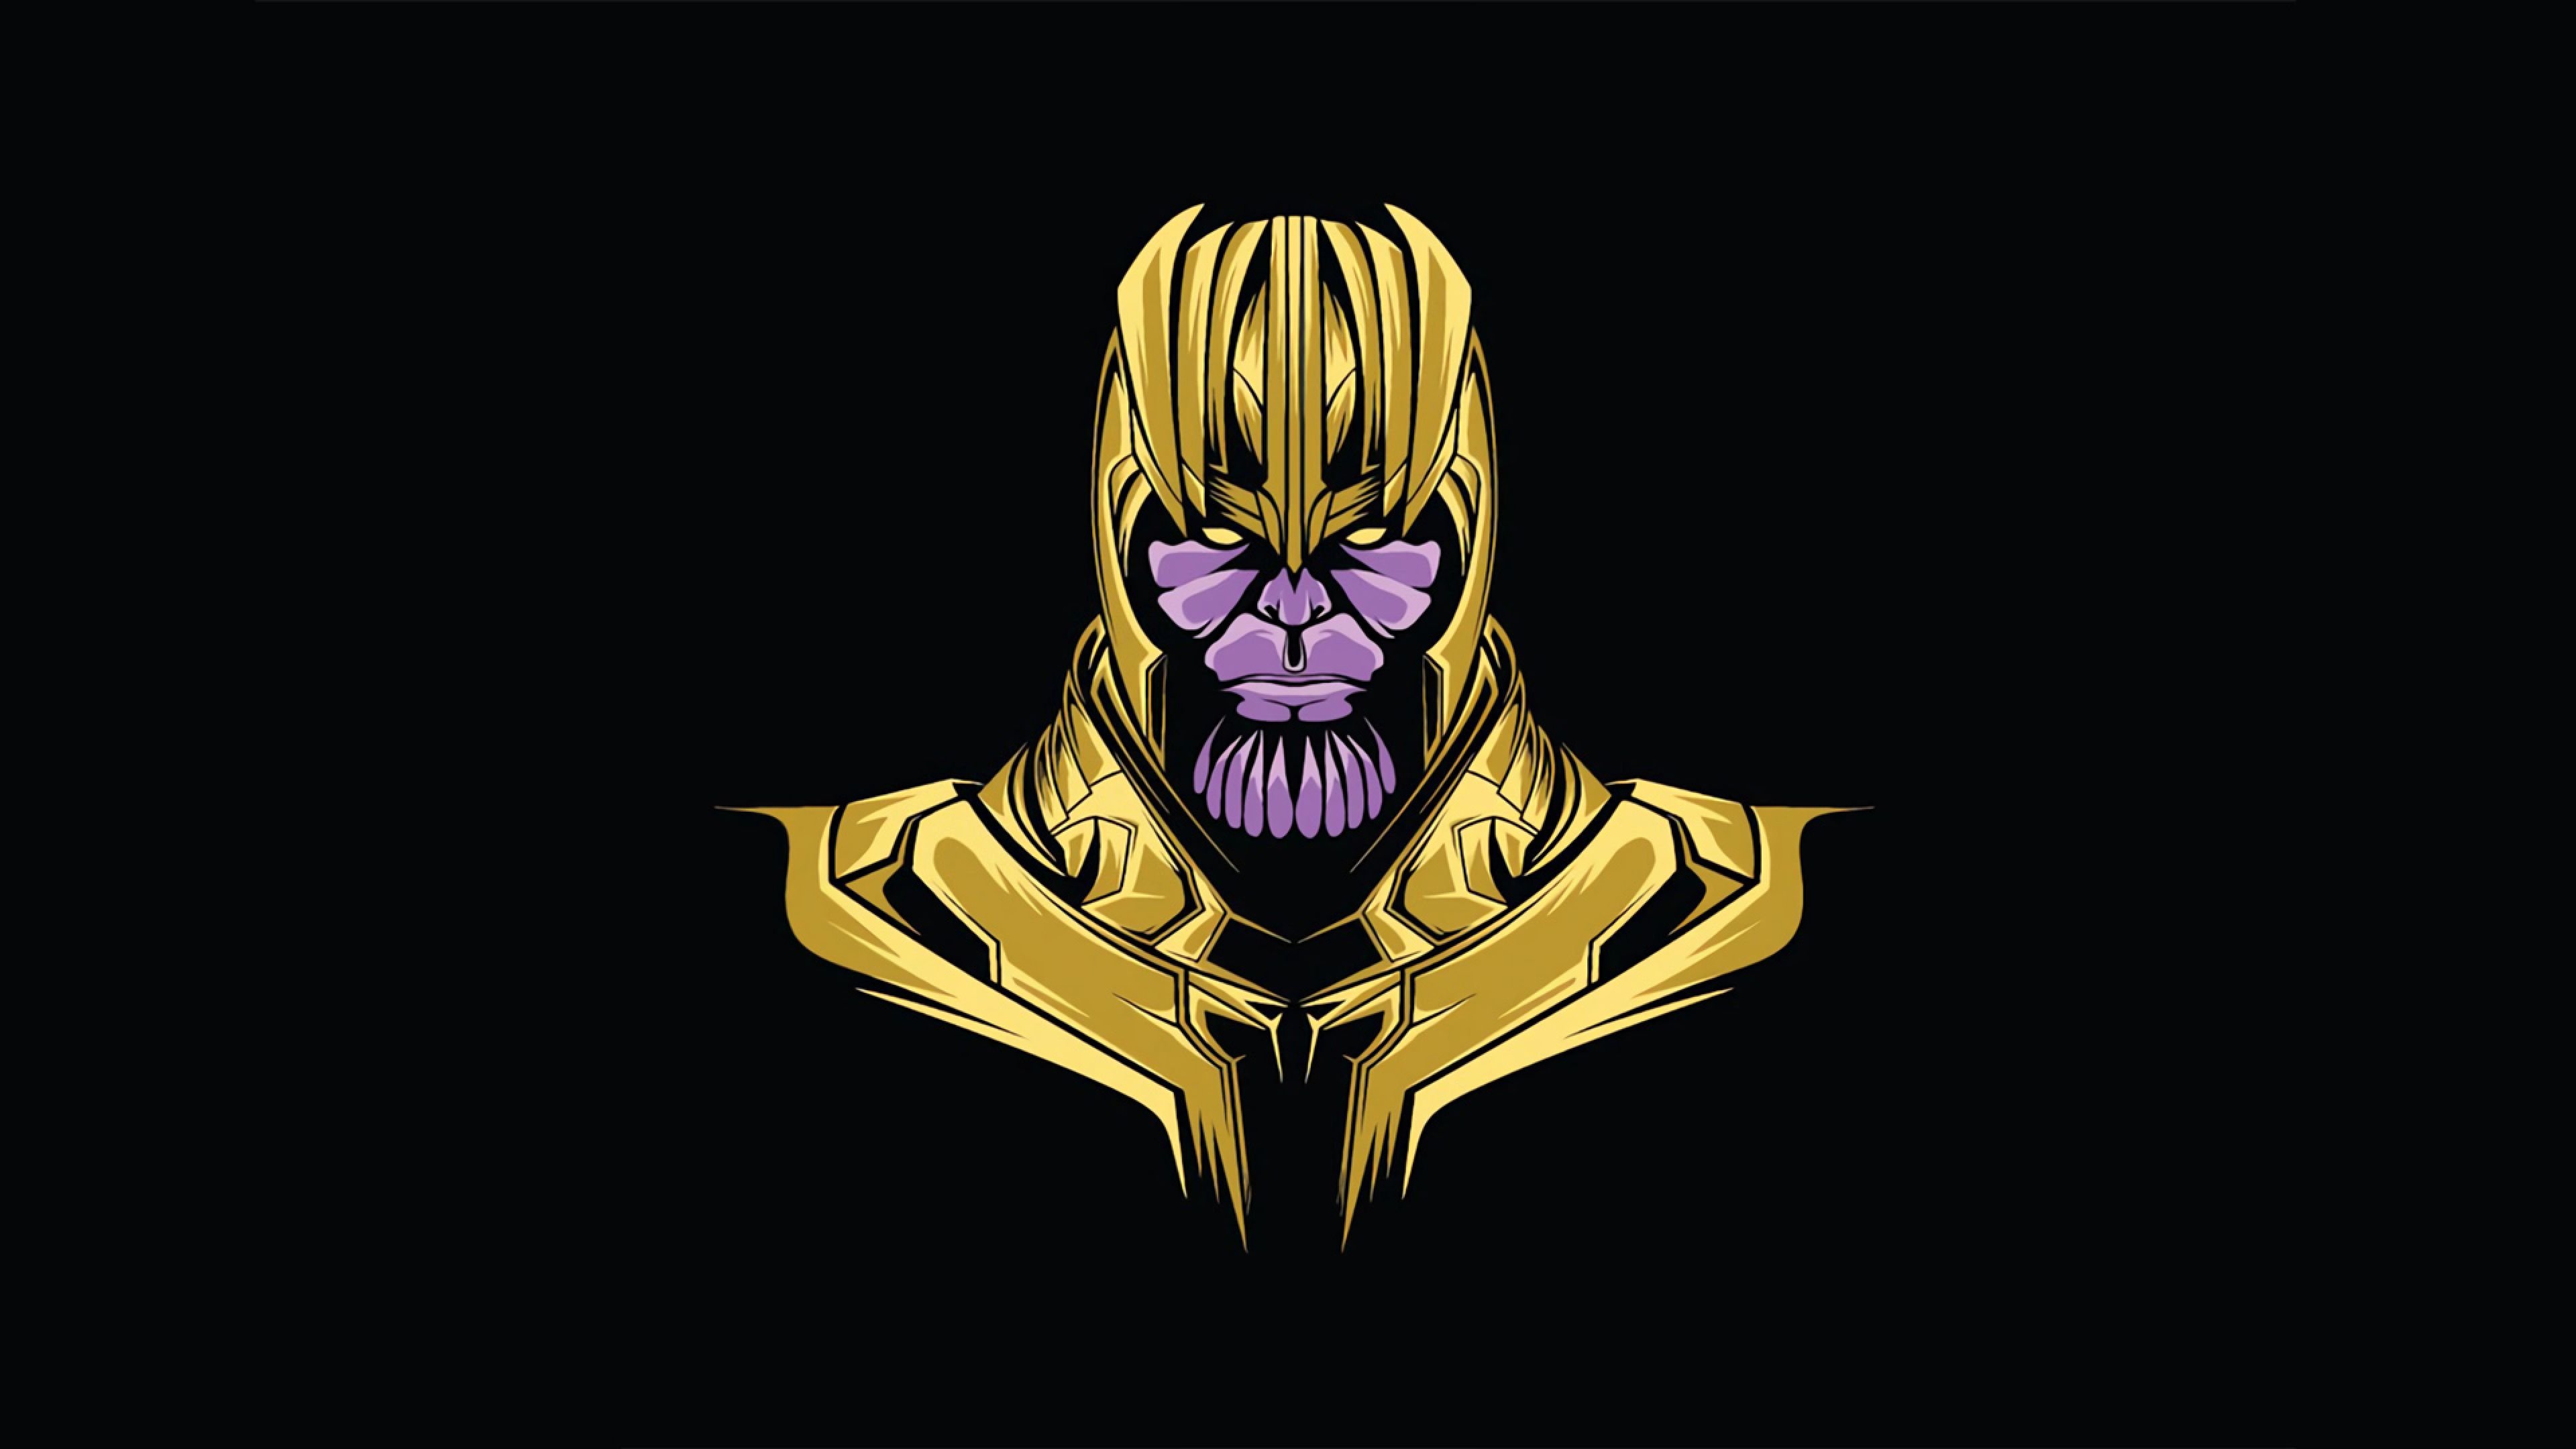 Thanos Minimal 4K Wallpaper, HD Minimalist 4K Wallpaper, Image, Photo and Background